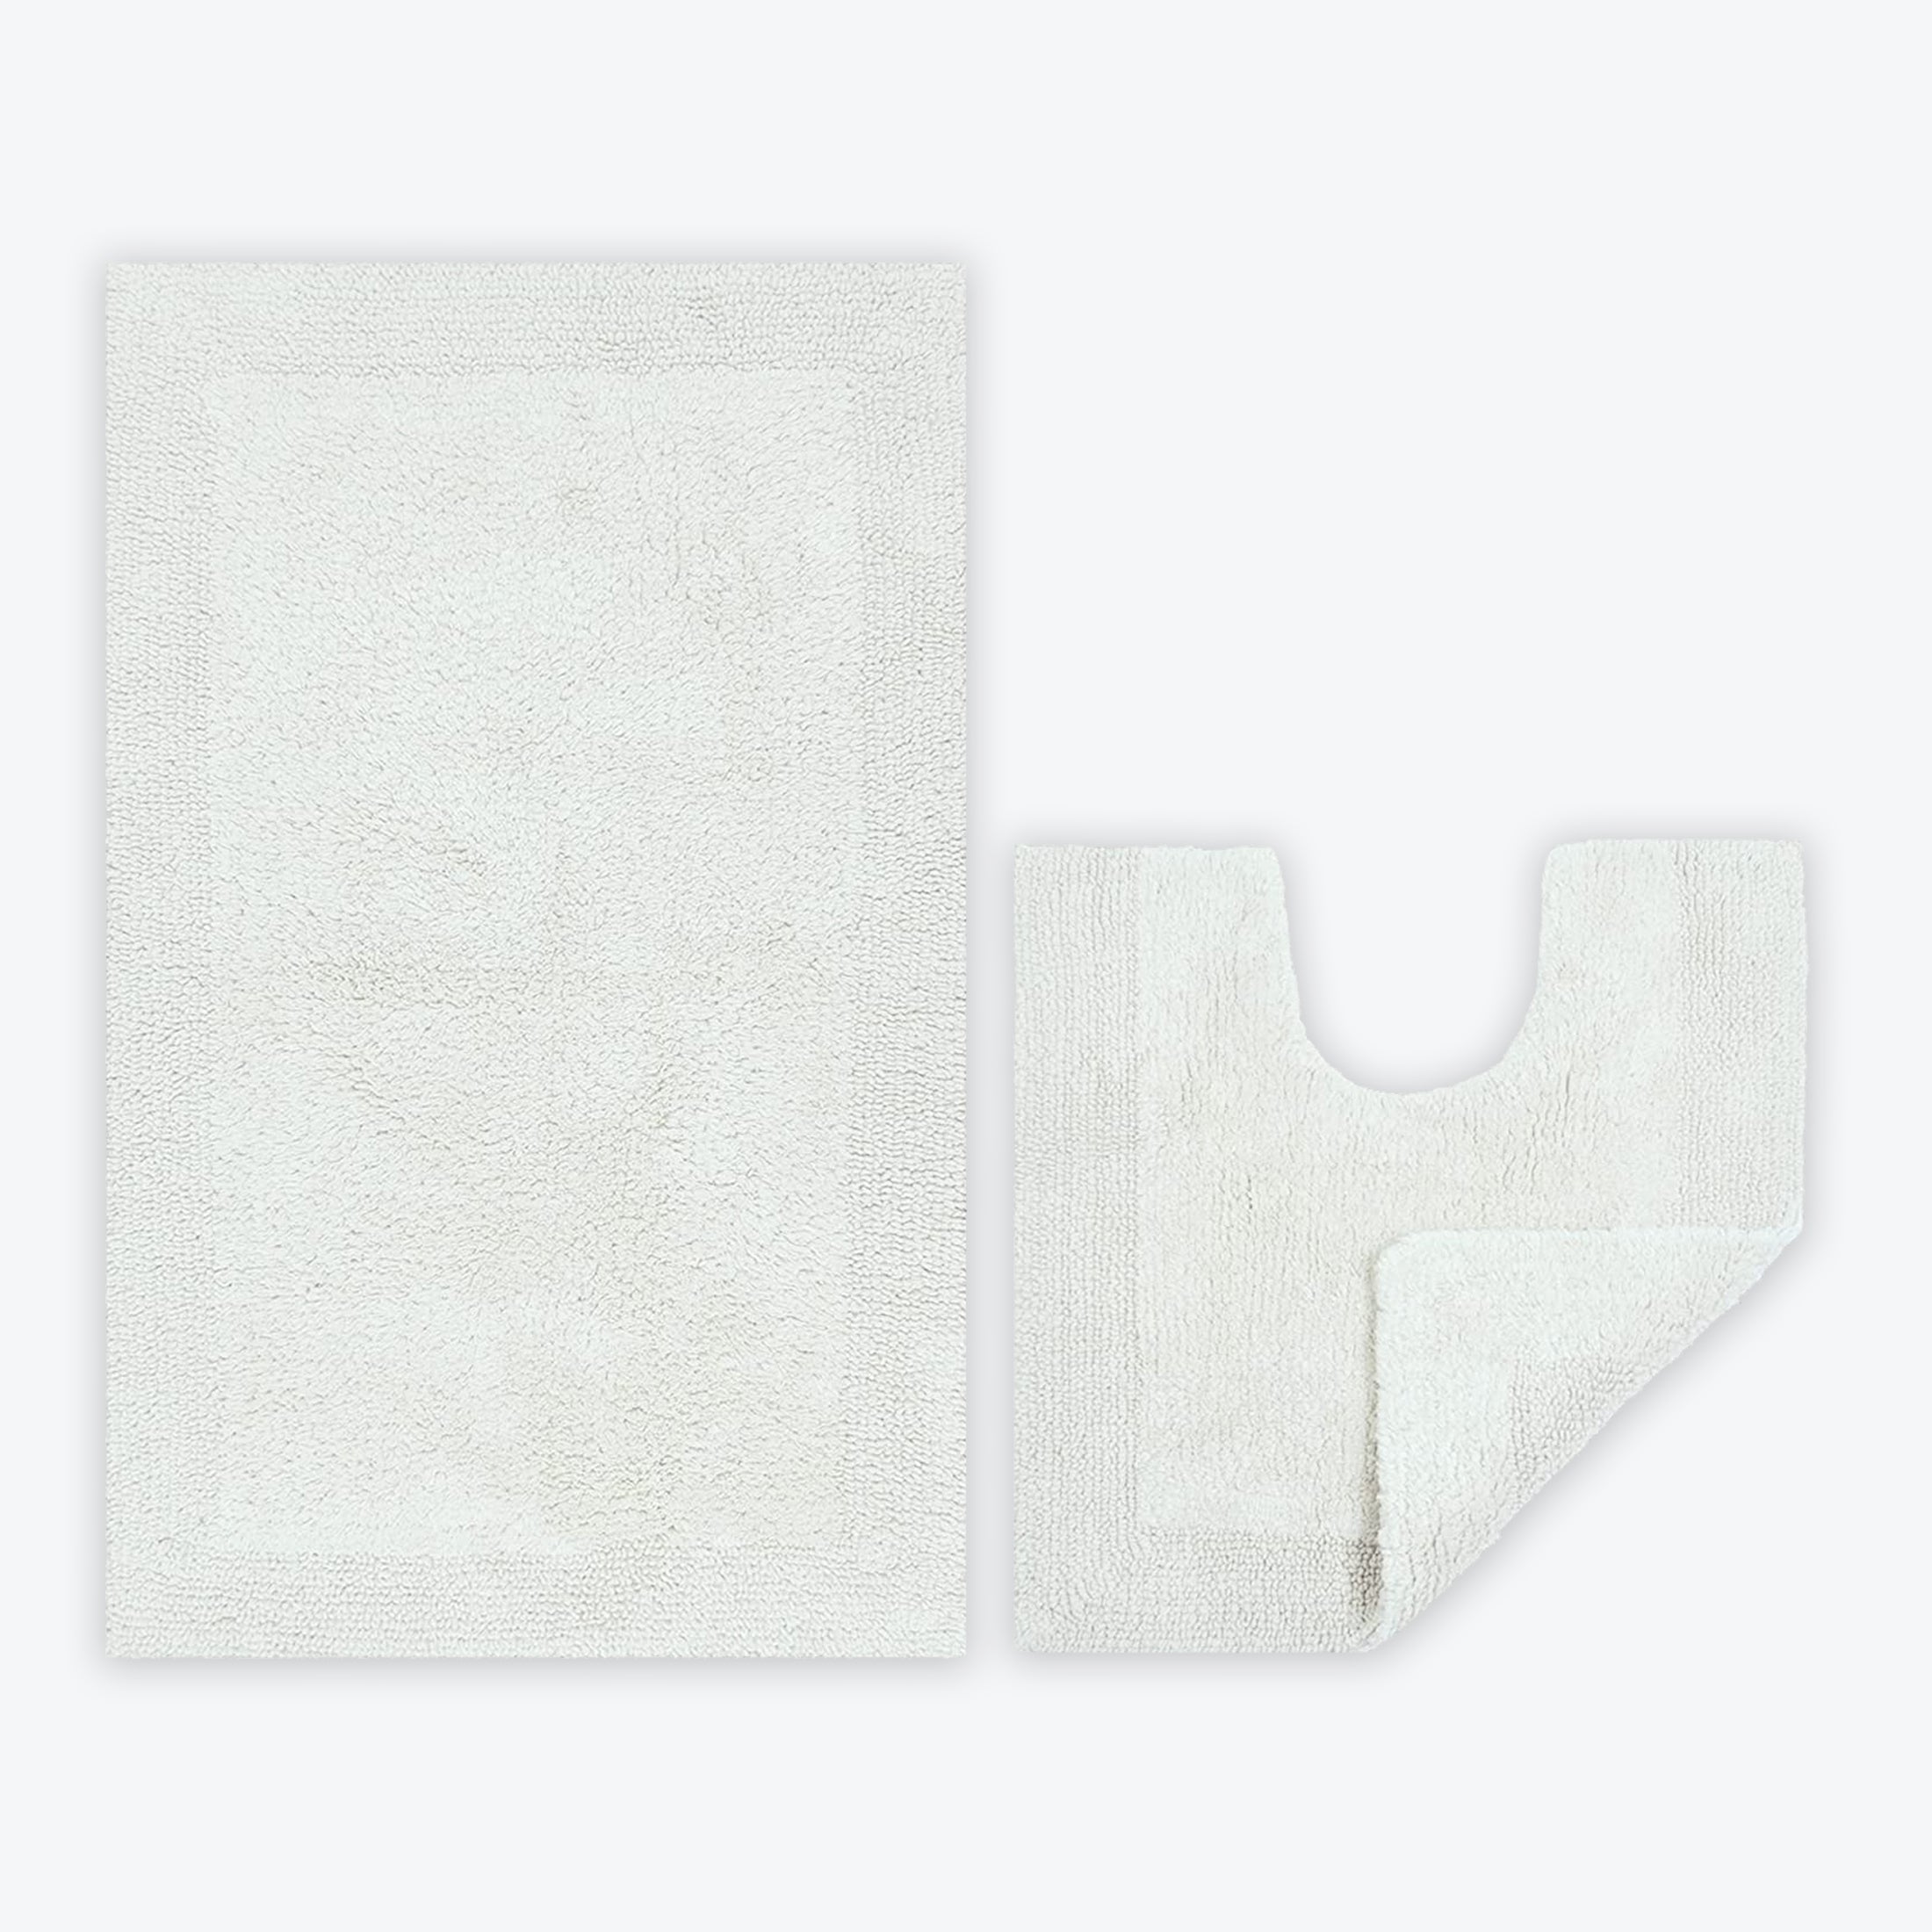 White bath mat and pedestal mat 2pc set luxury reversible bathroom mats